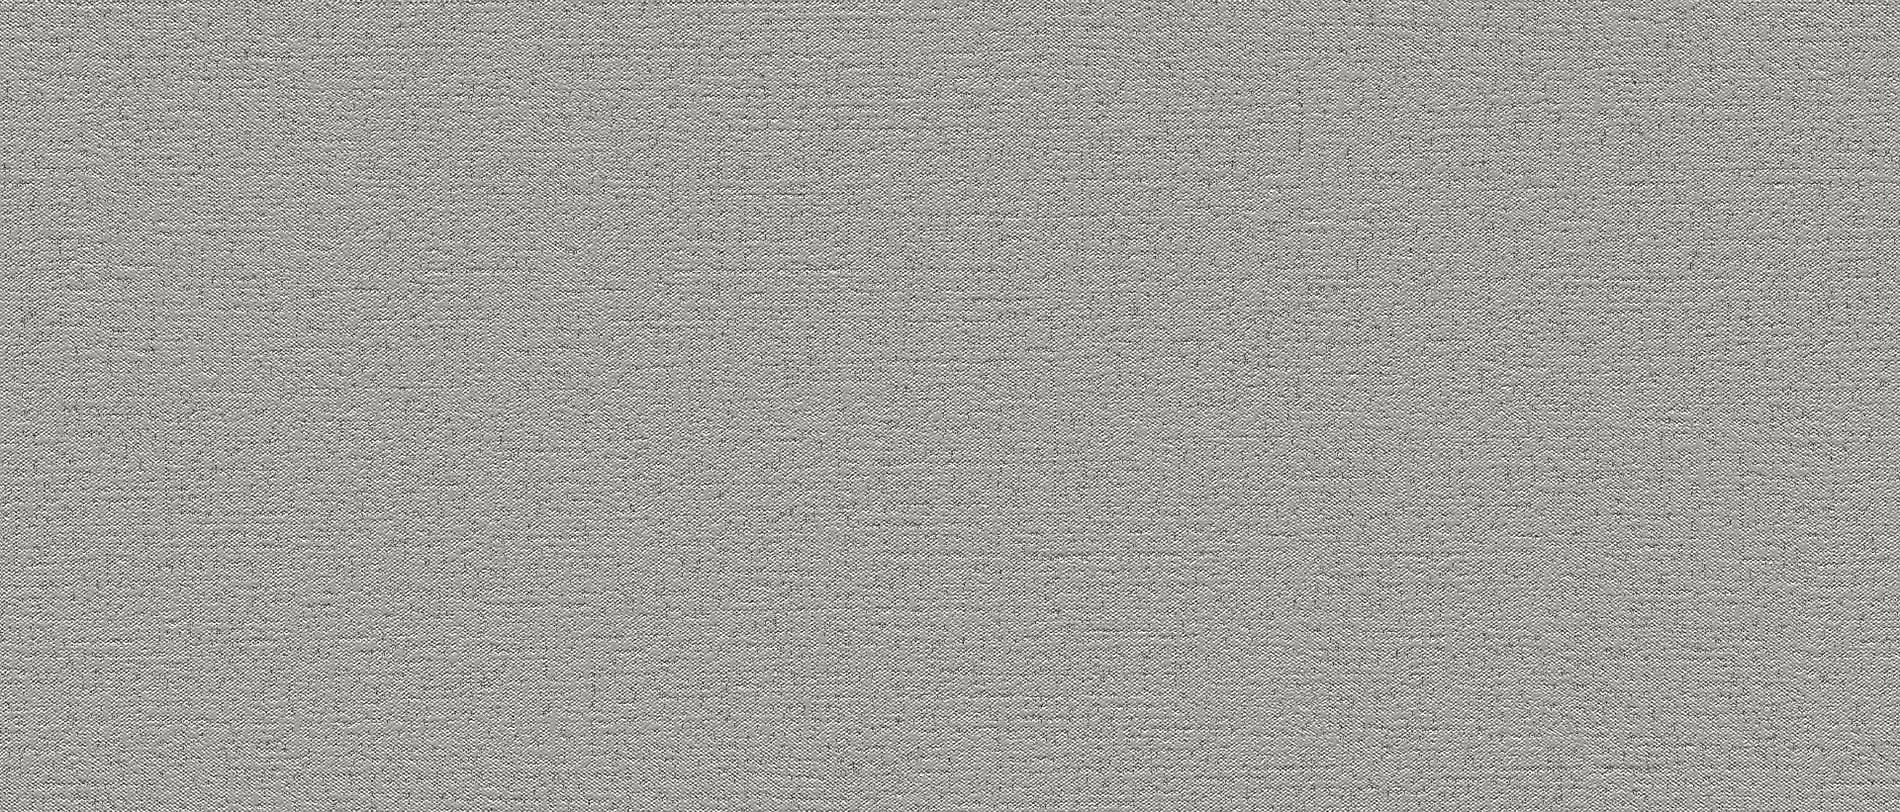 Bassanesi Silk Light Grey 25.4x60.8